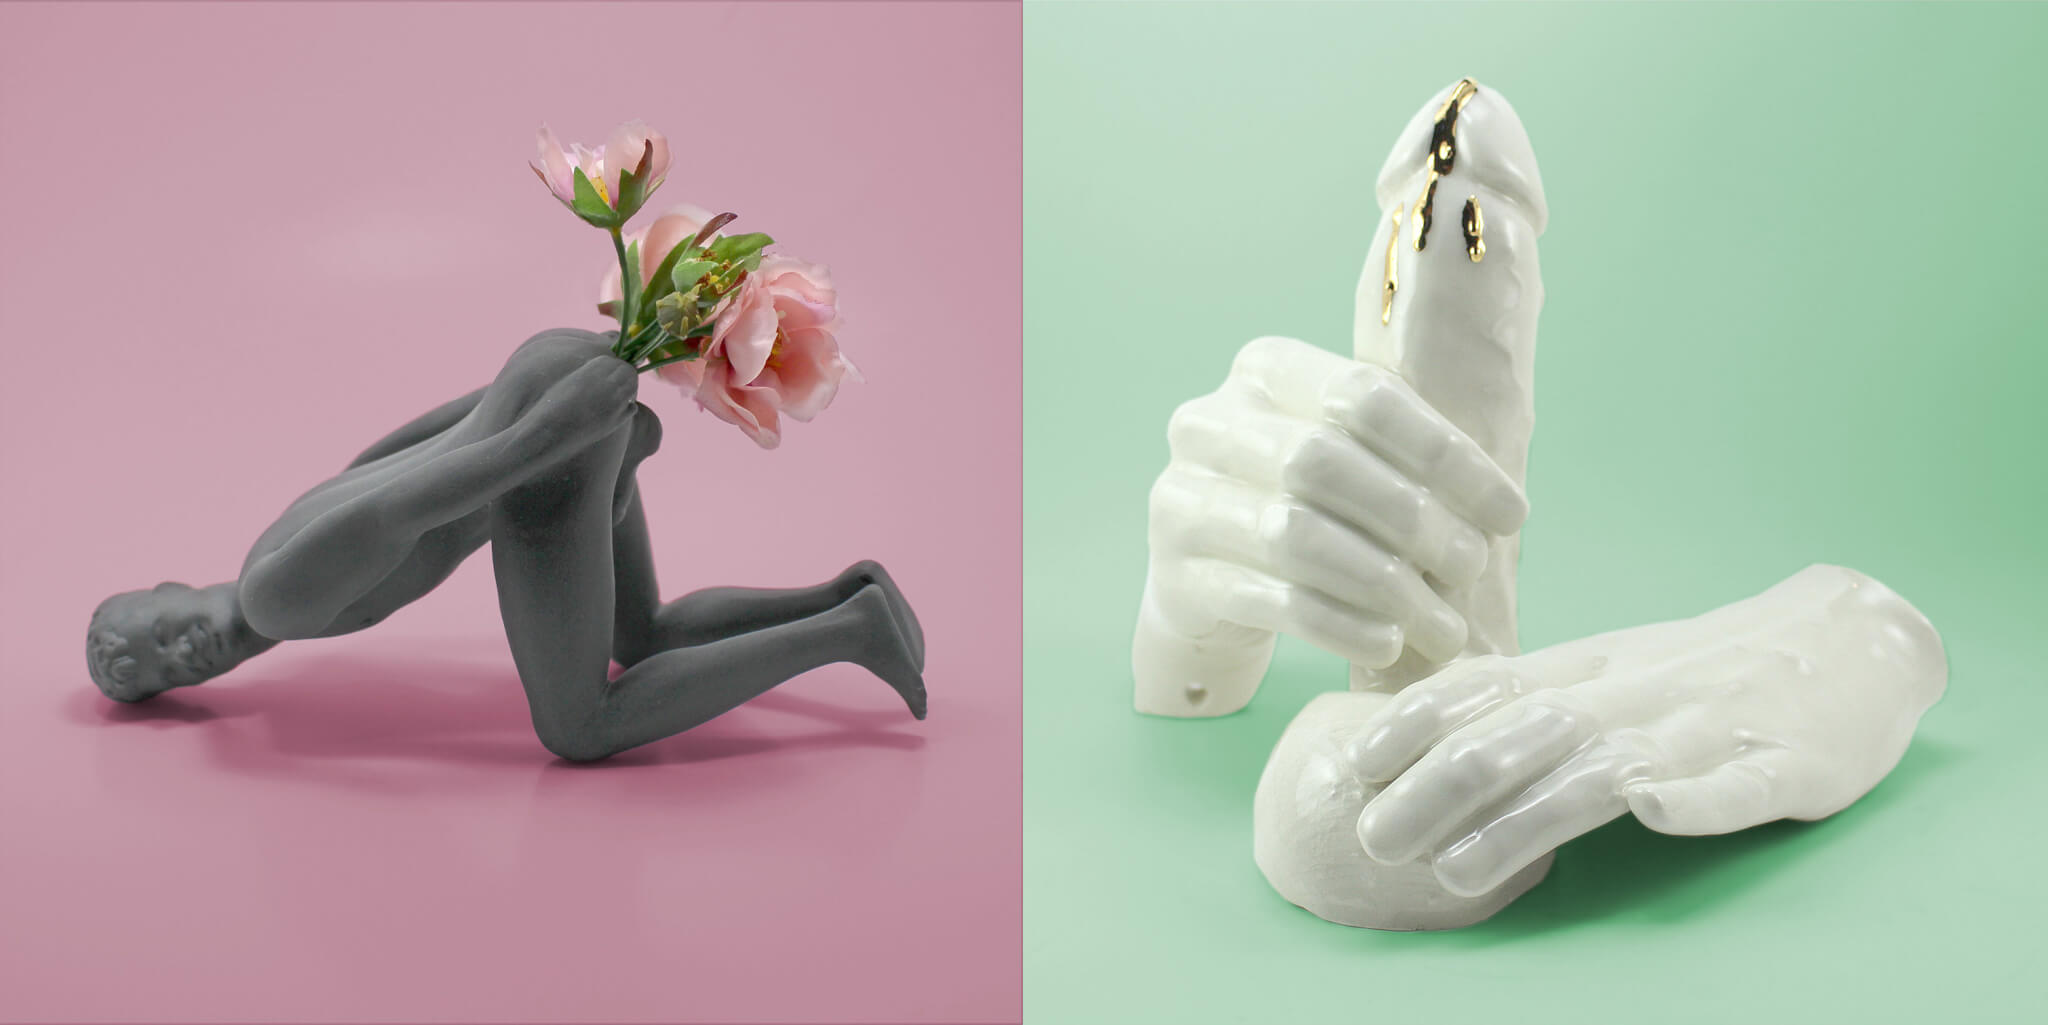 L'eros delle porcellane a tematica fetish di Pansy Ass Ceramics - pcera2 - Gay.it